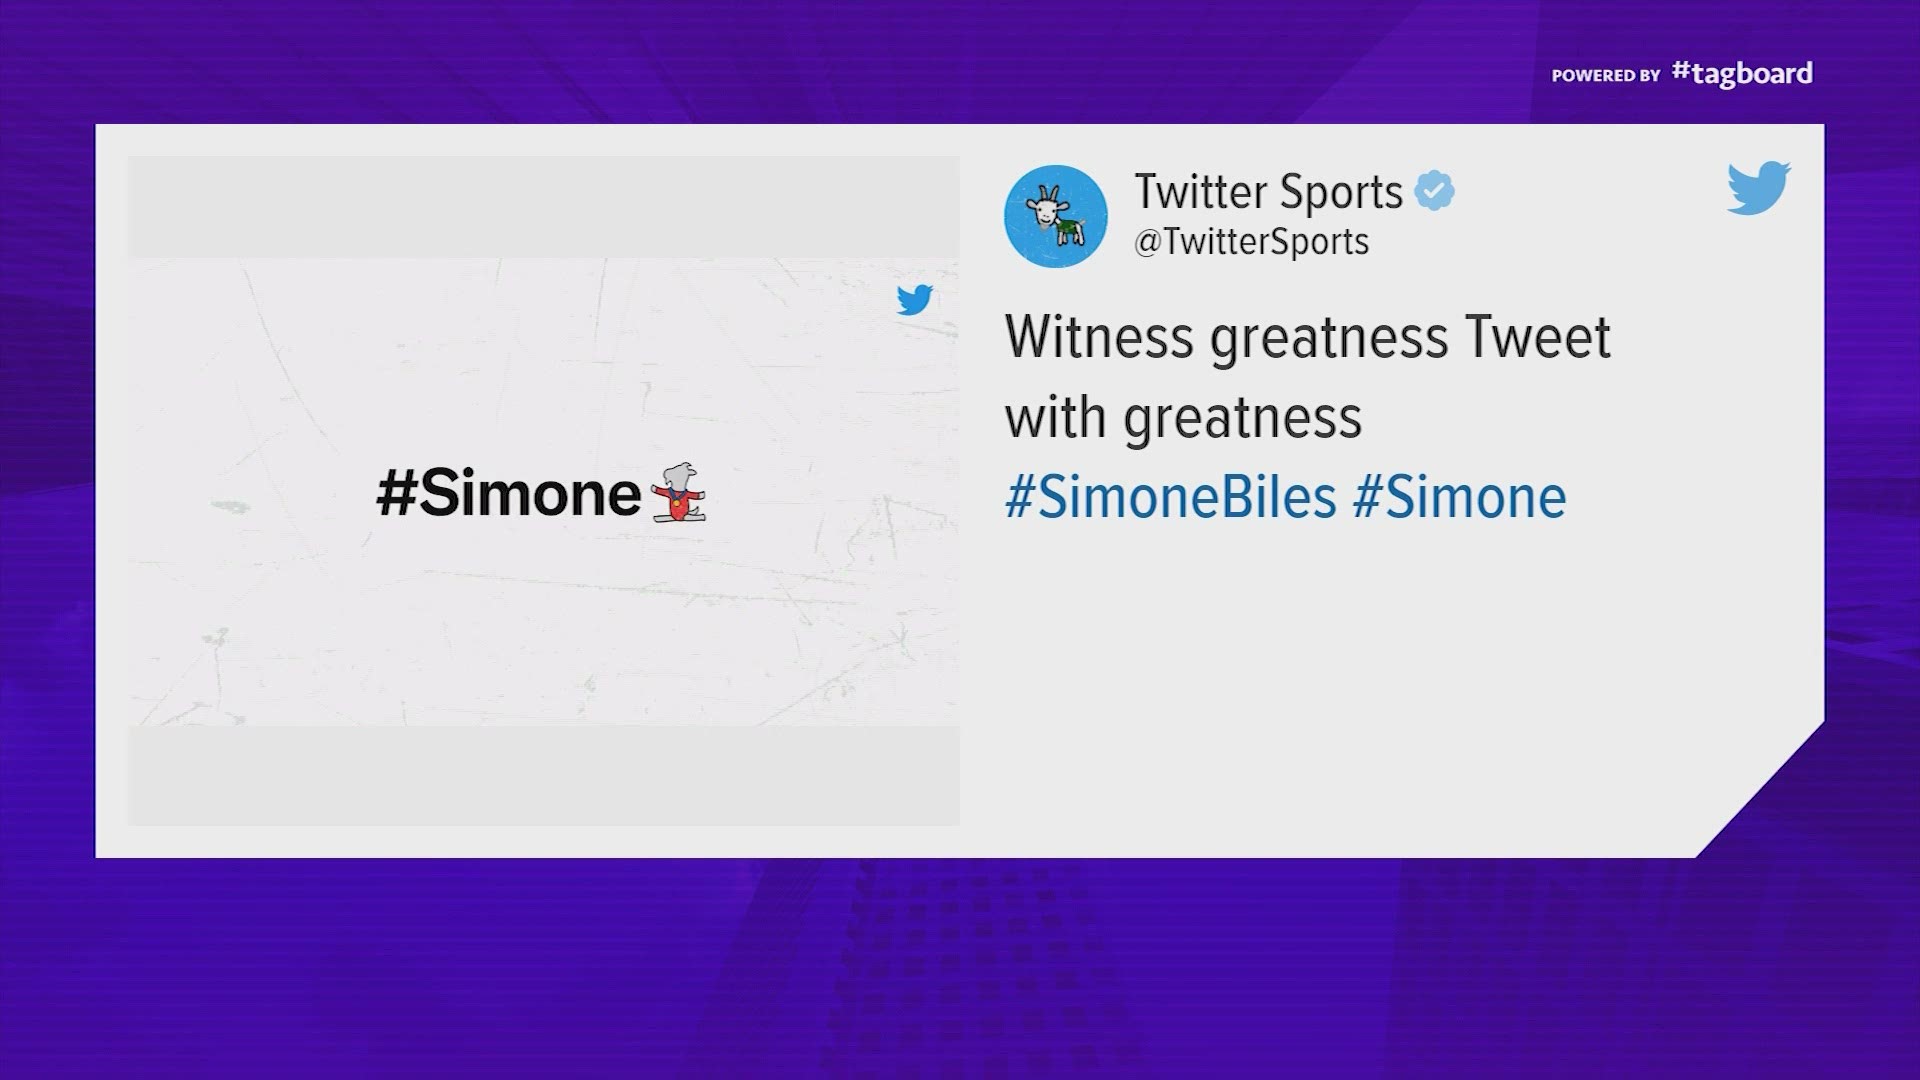 Use #SimoneBiles and you'll get a special GOAT emoji.